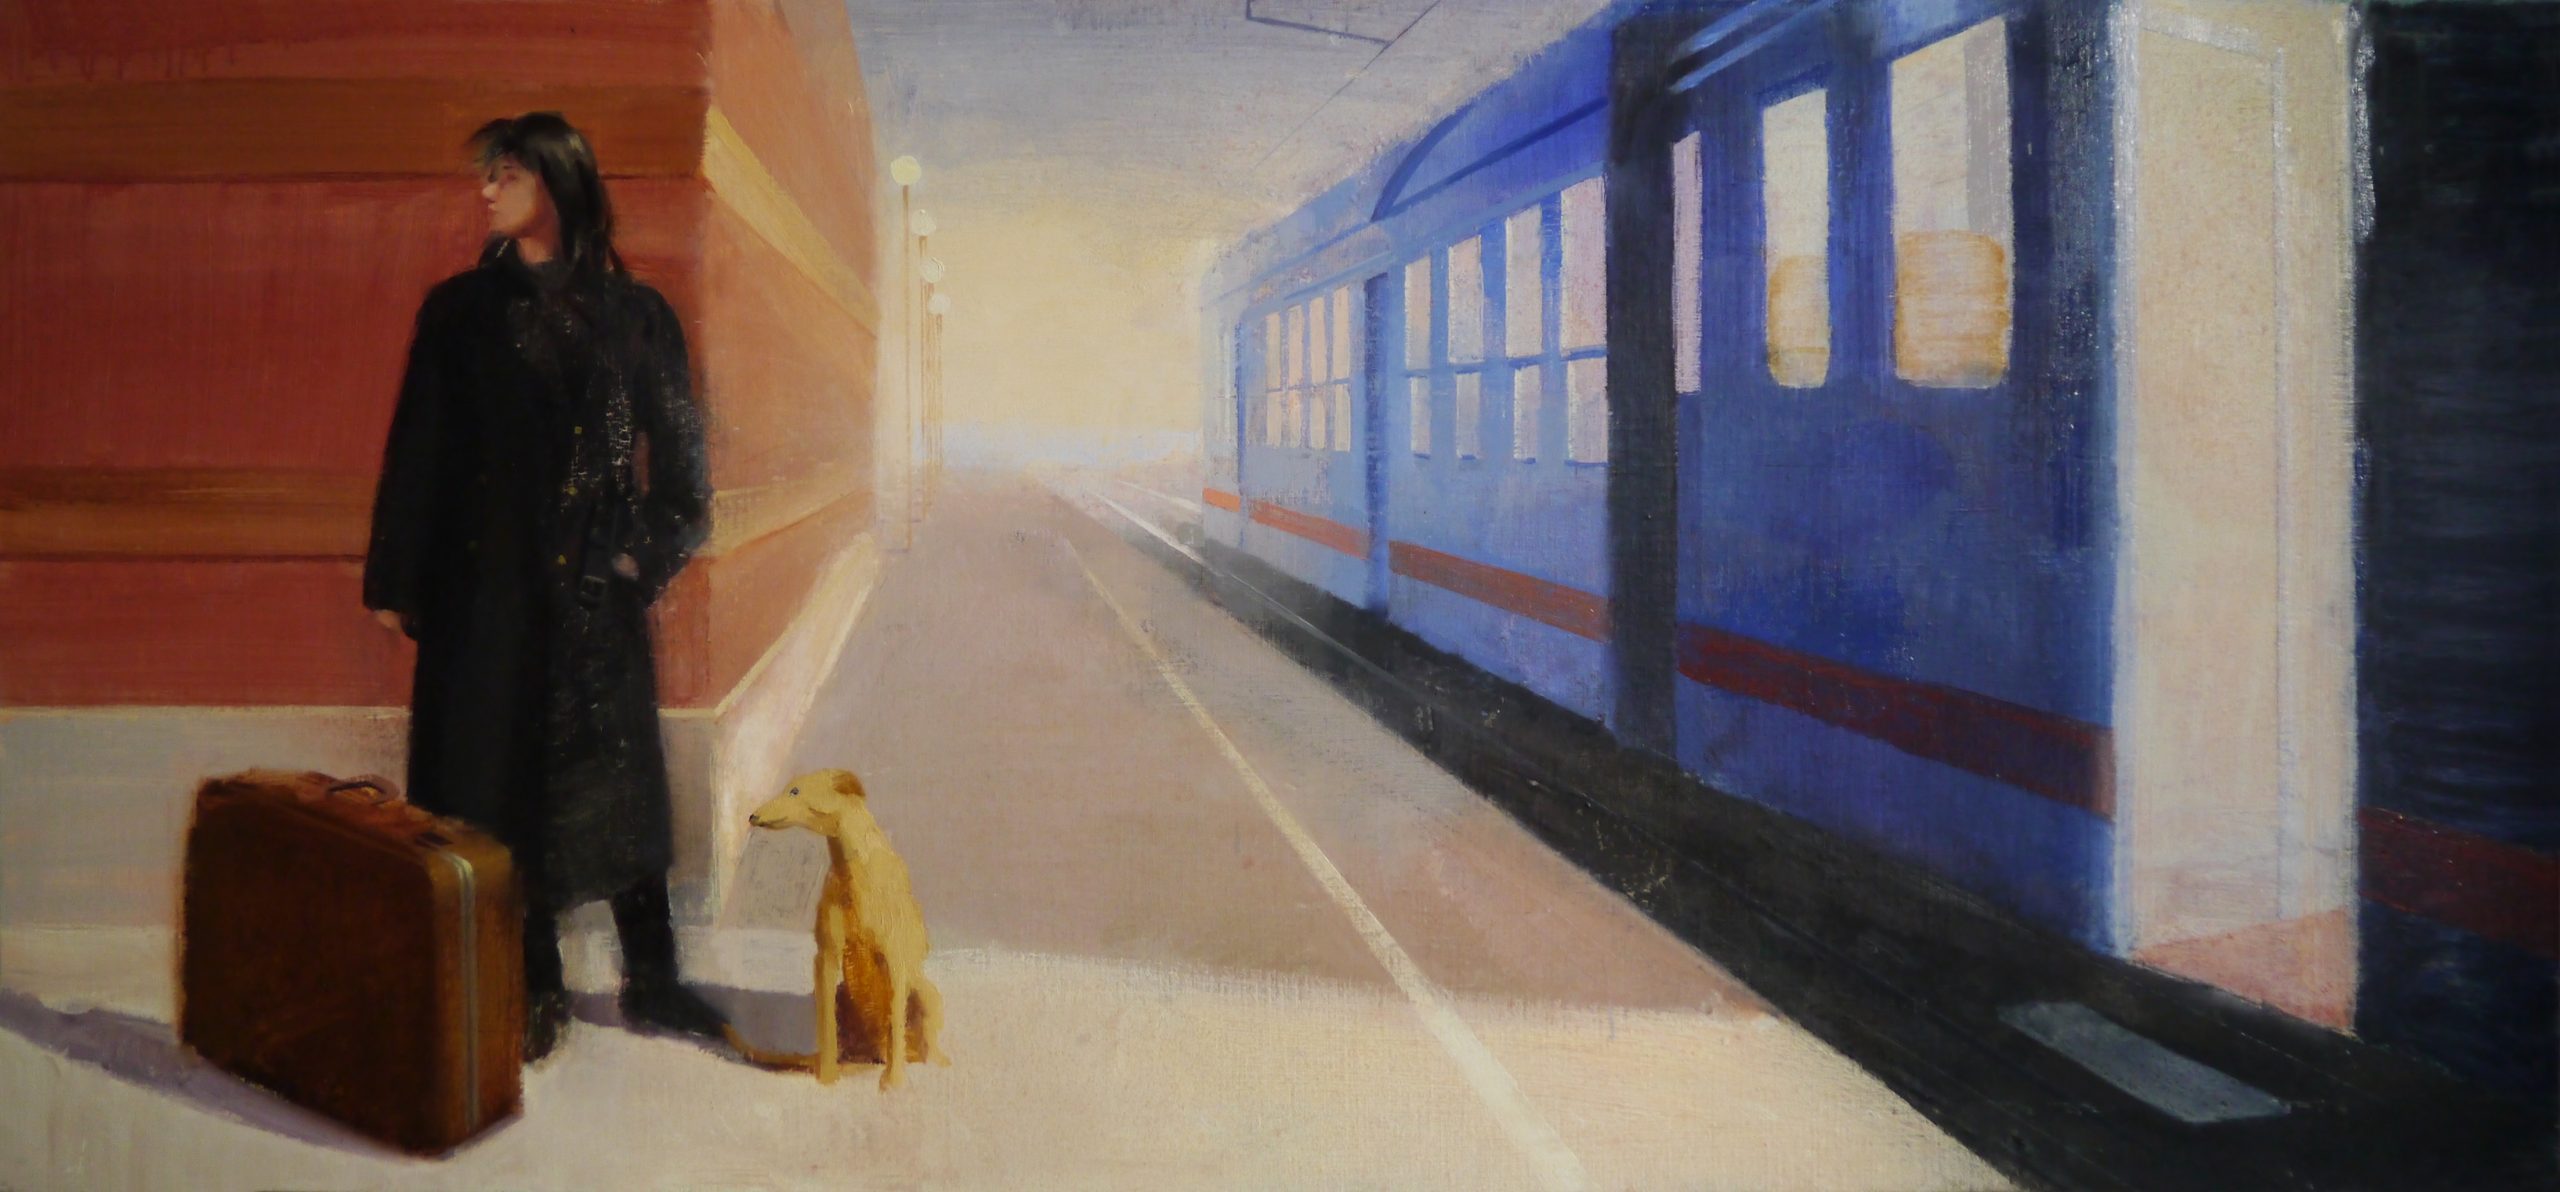 pasajeros-al-tren-estación-viaje-mujer-esperando-maleta-perro-alejandra-caballero-